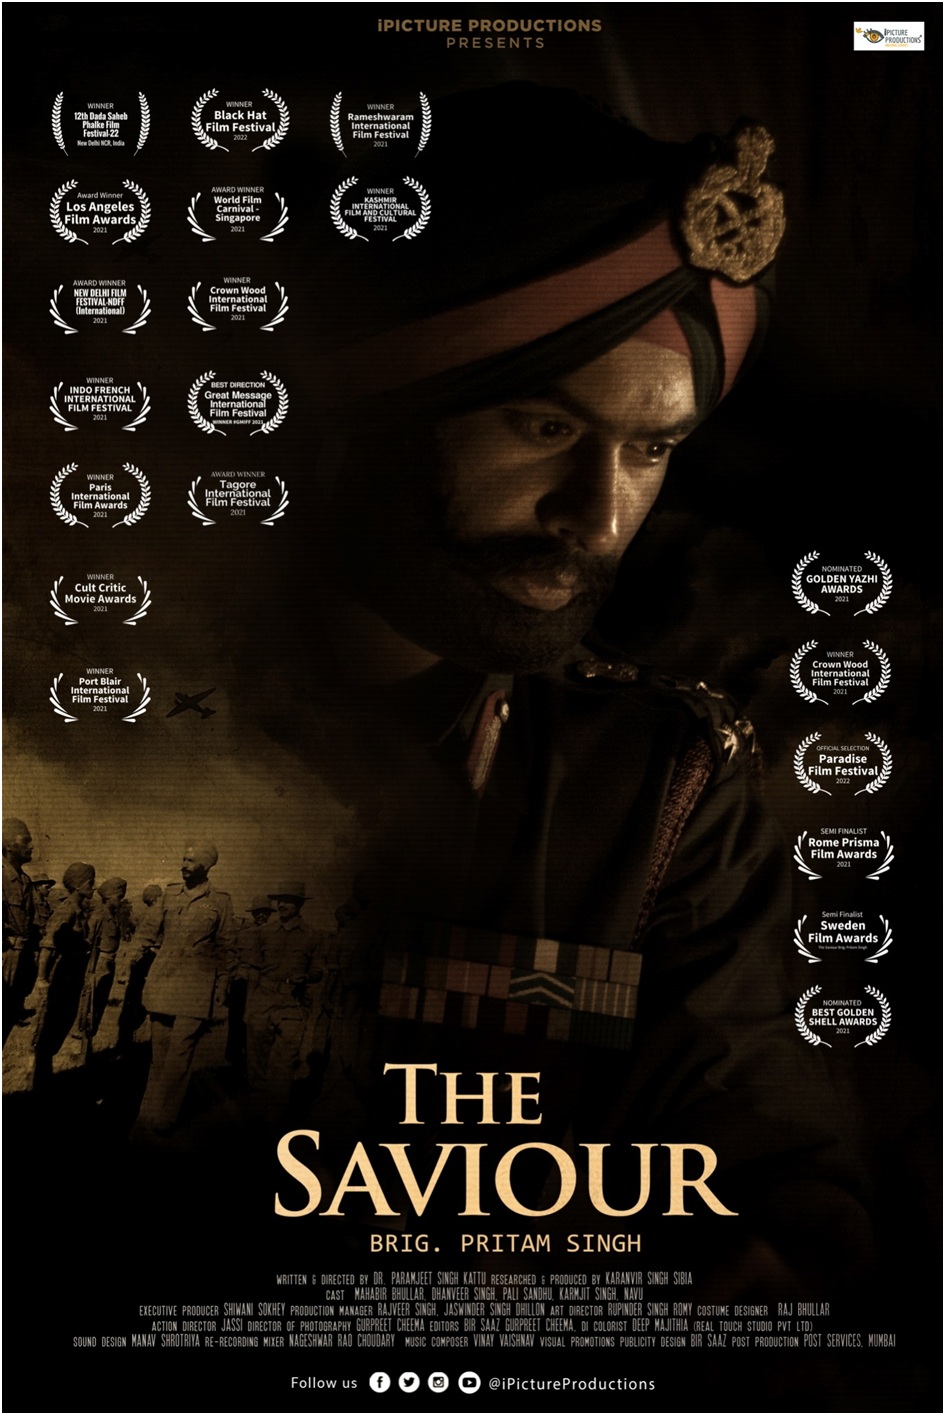 Punjabi documentary The Saviour: Brig Pritam Singh gets Best Documentary Award at 12th Dada Saheb Phalke Film Festival 2022